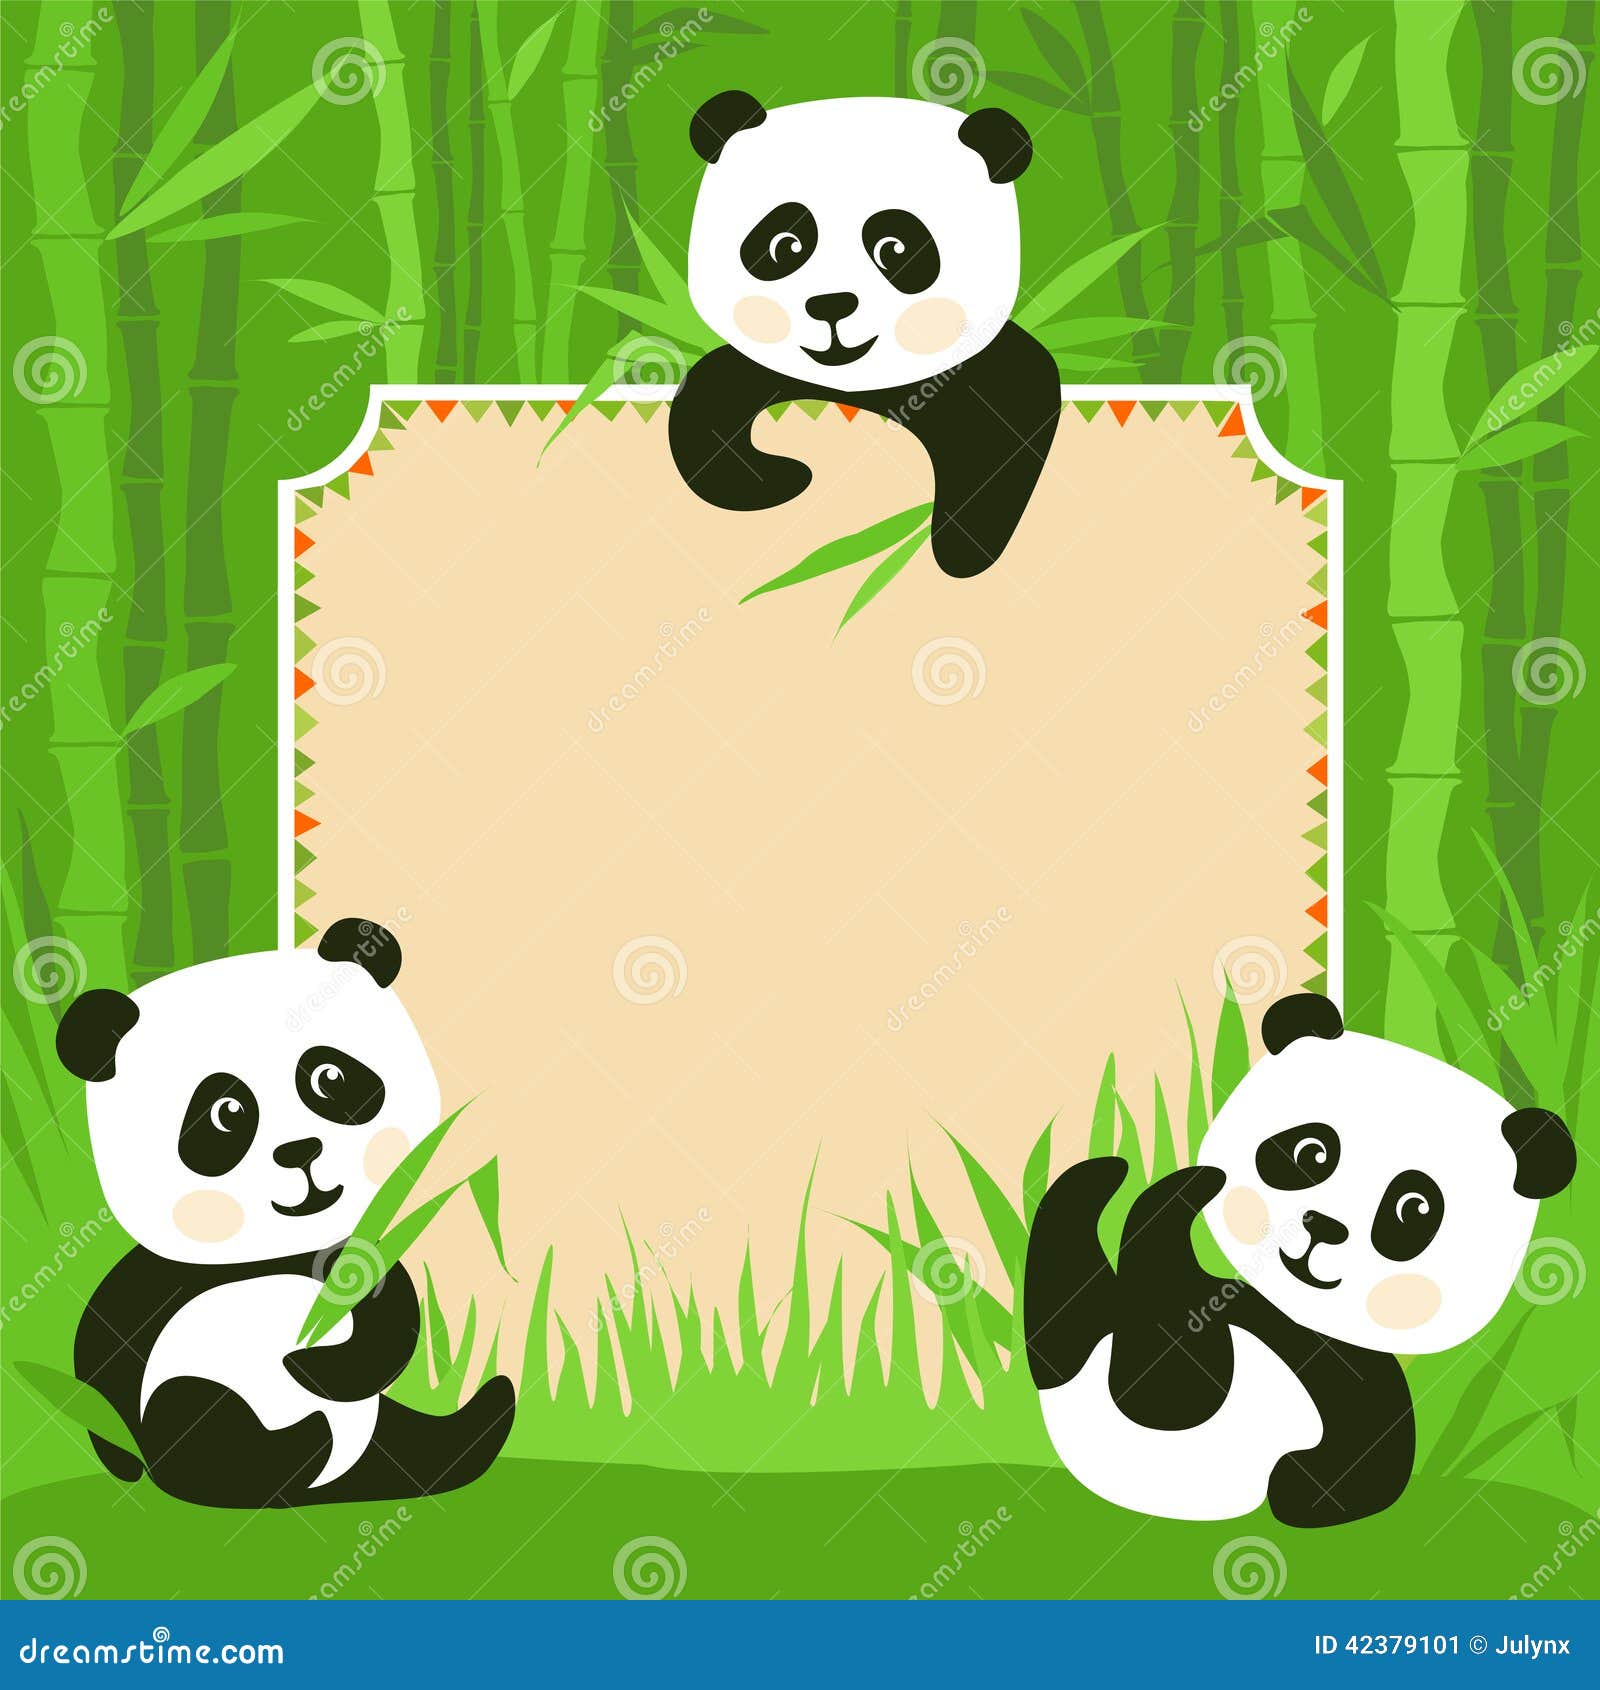 clipart panda borders - photo #4